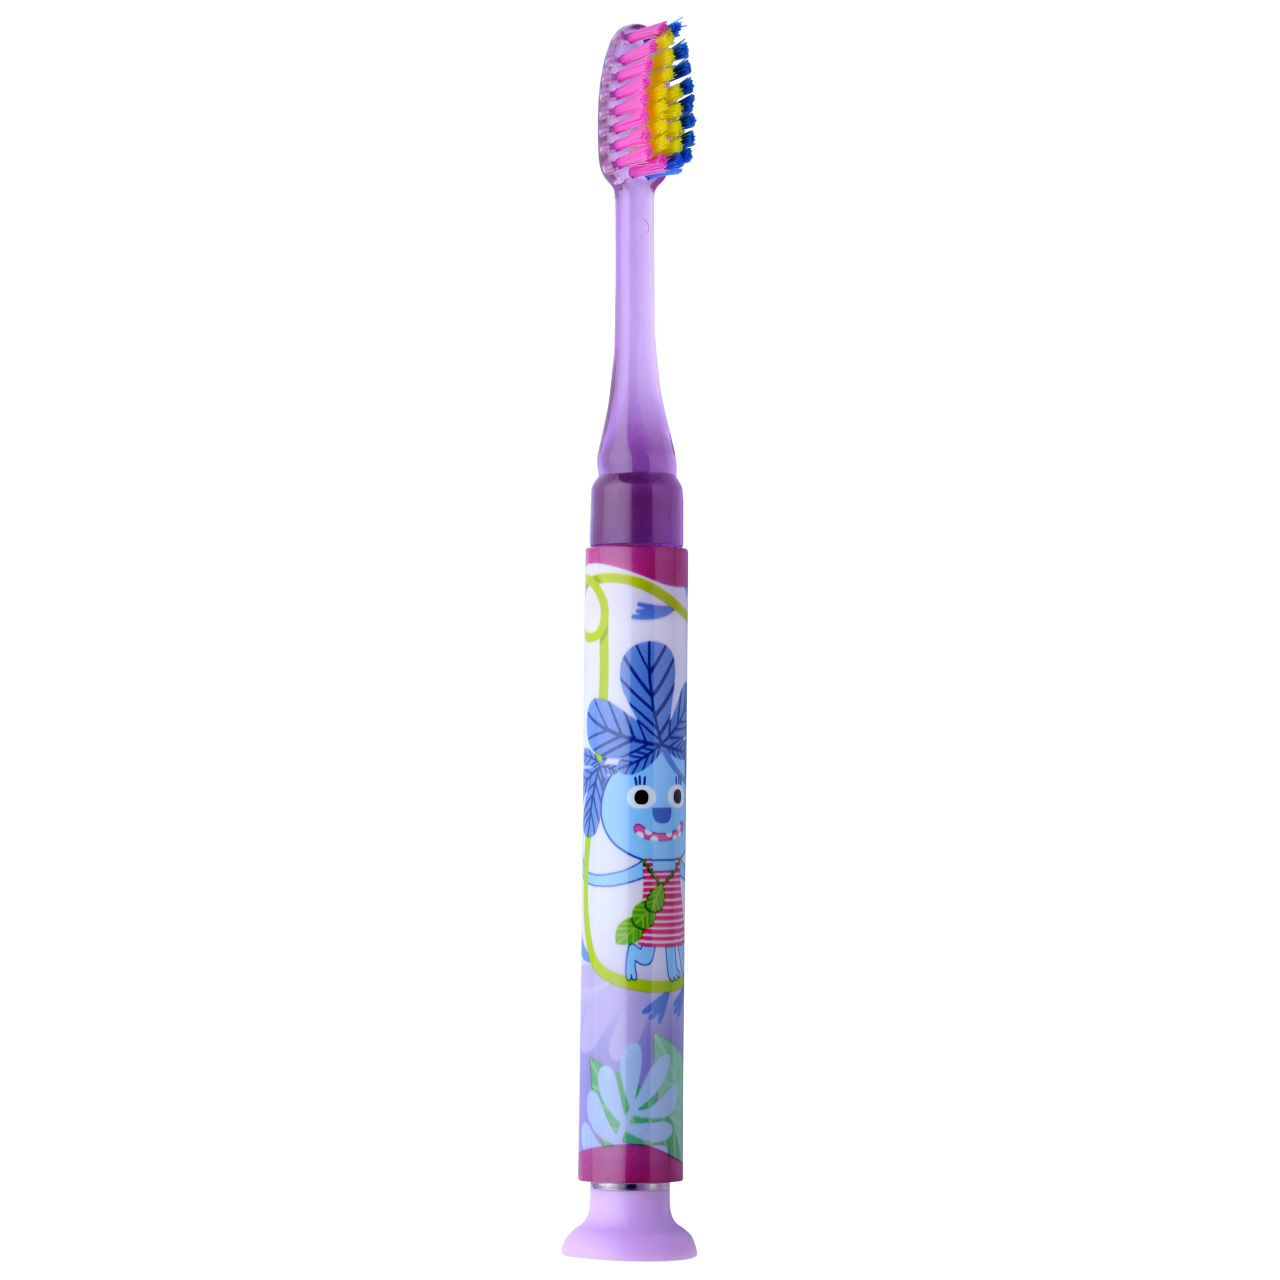 P903M_GUM Light Up Toothbrush angle_Pink2